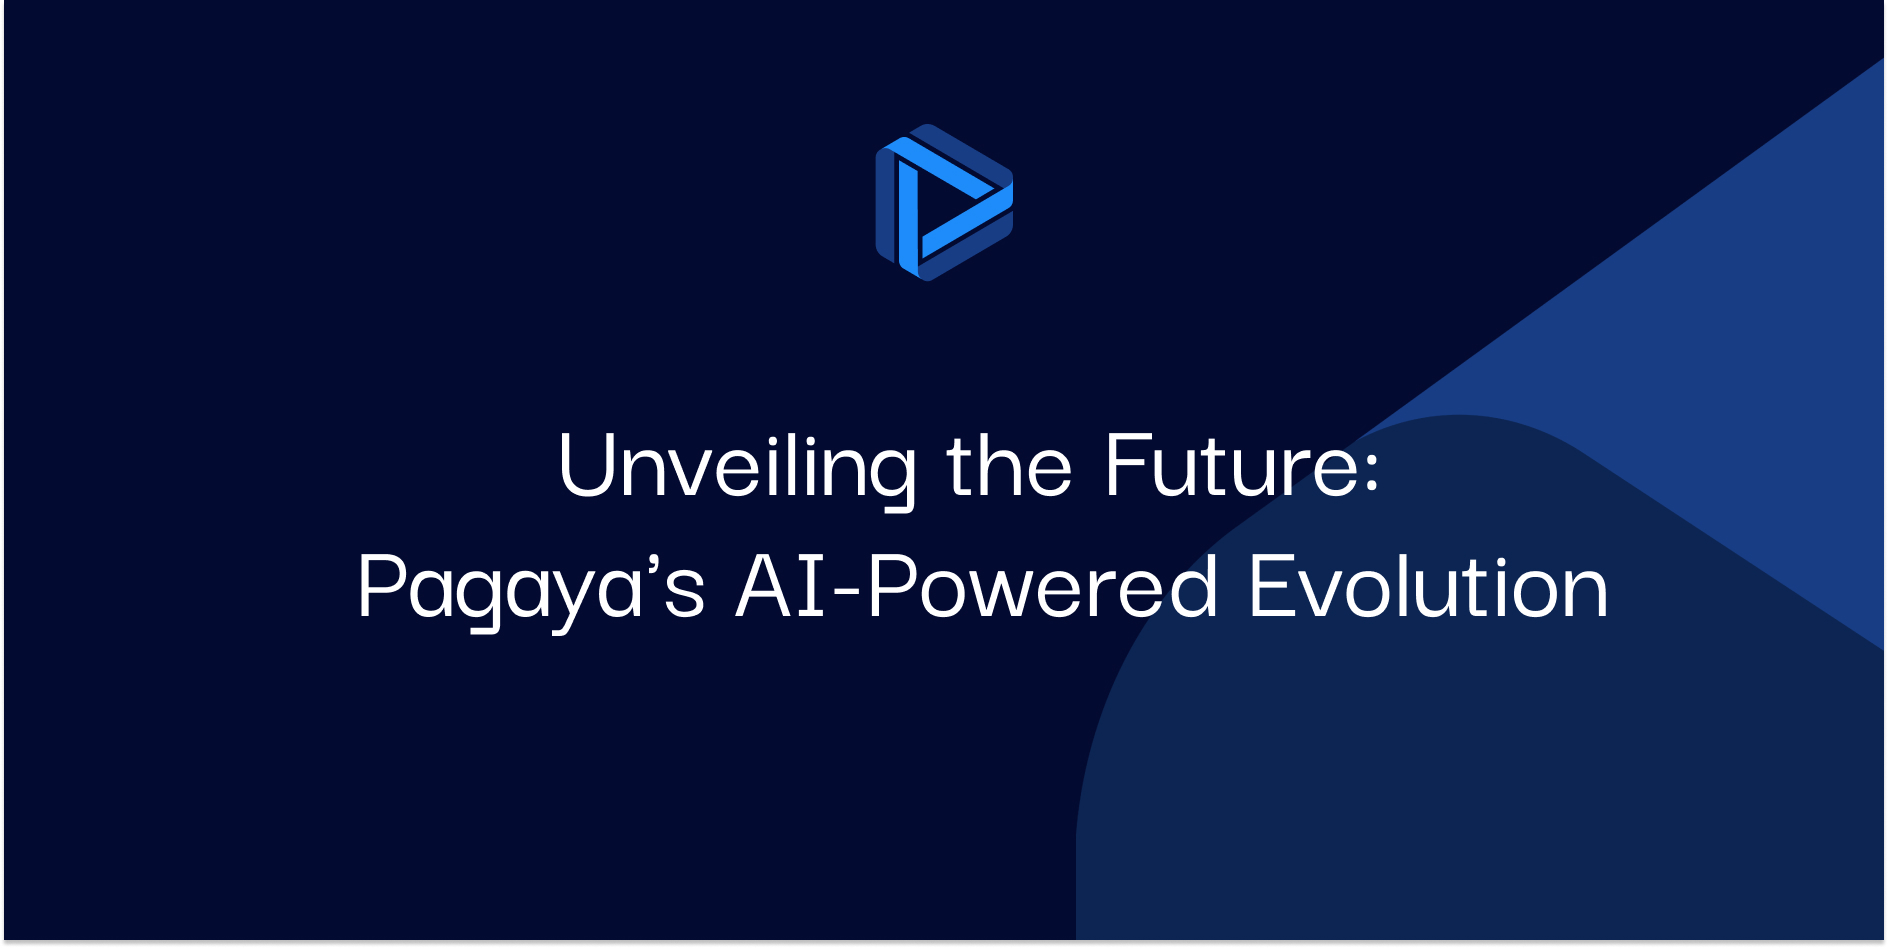 Unveiling the Future: Pagaya's AI-Powered Evolution